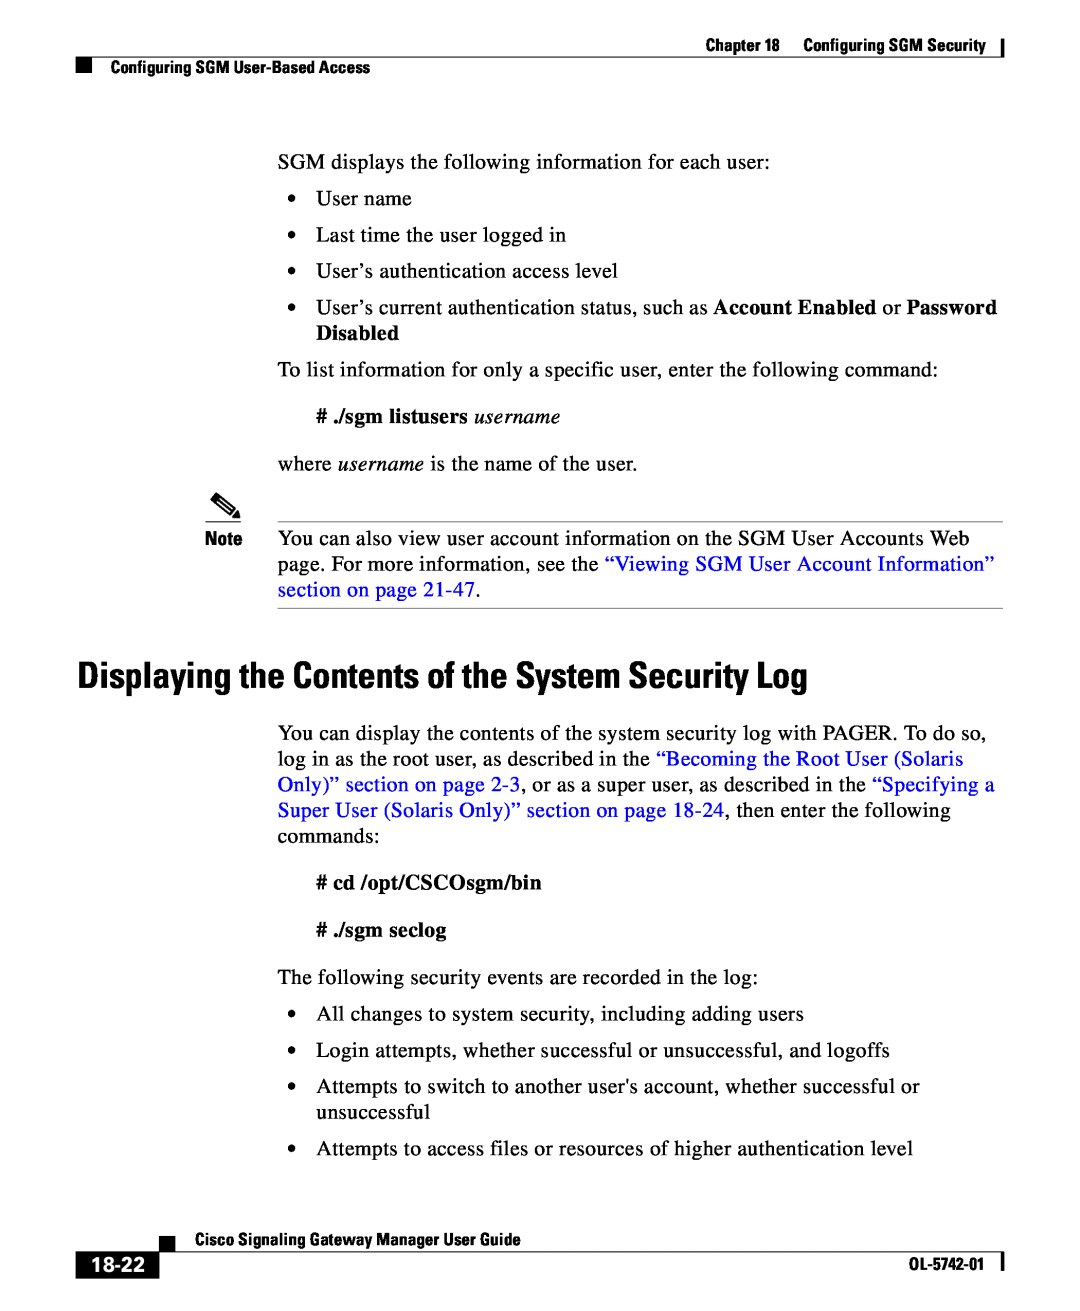 Cisco Systems OL-5742-01 manual Disabled, # ./sgm listusers username, #cd /opt/CSCOsgm/bin #./sgm seclog, 18-22 